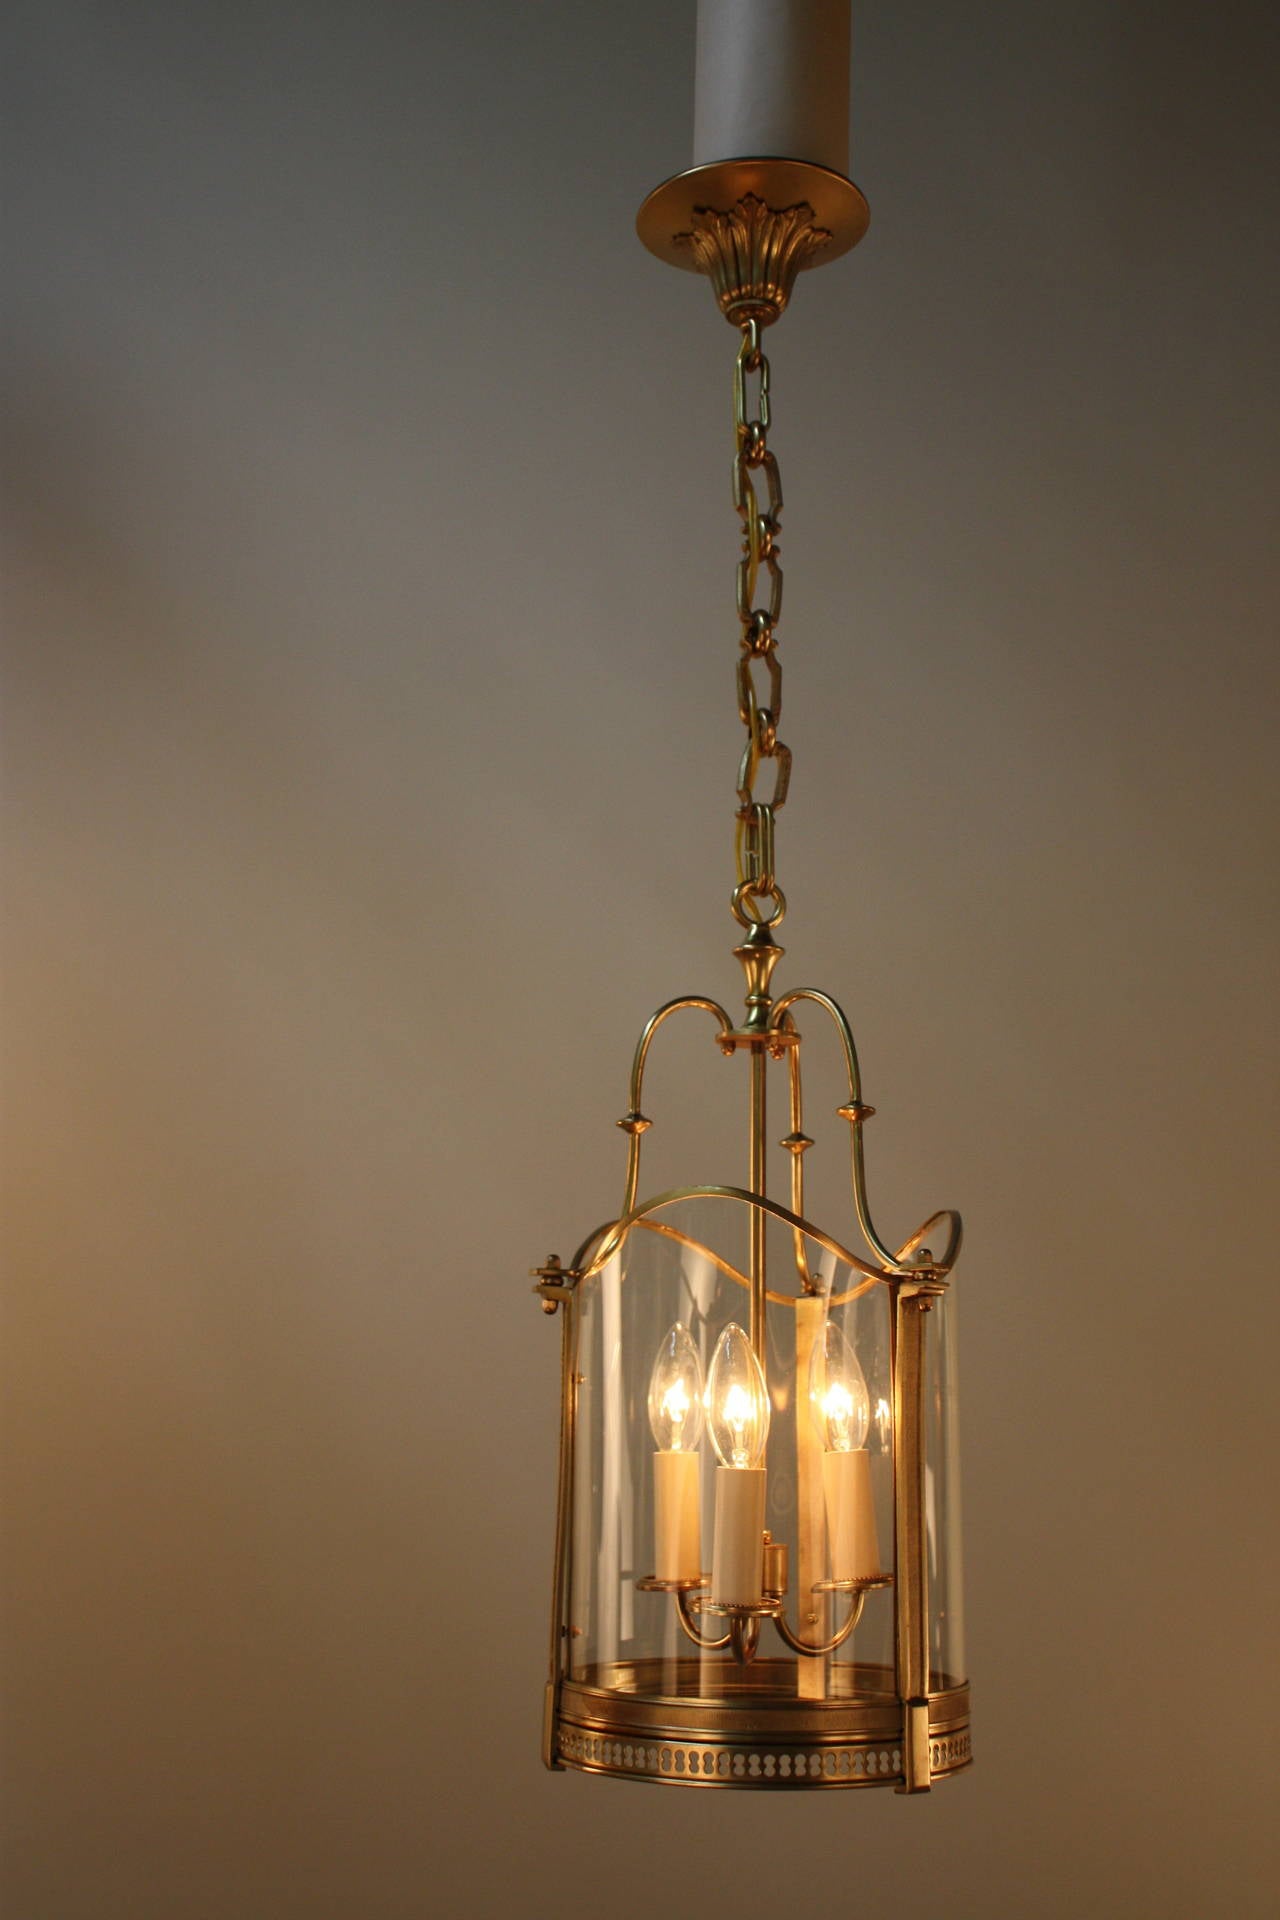 Beautiful three-light French bronze lantern great detail work.